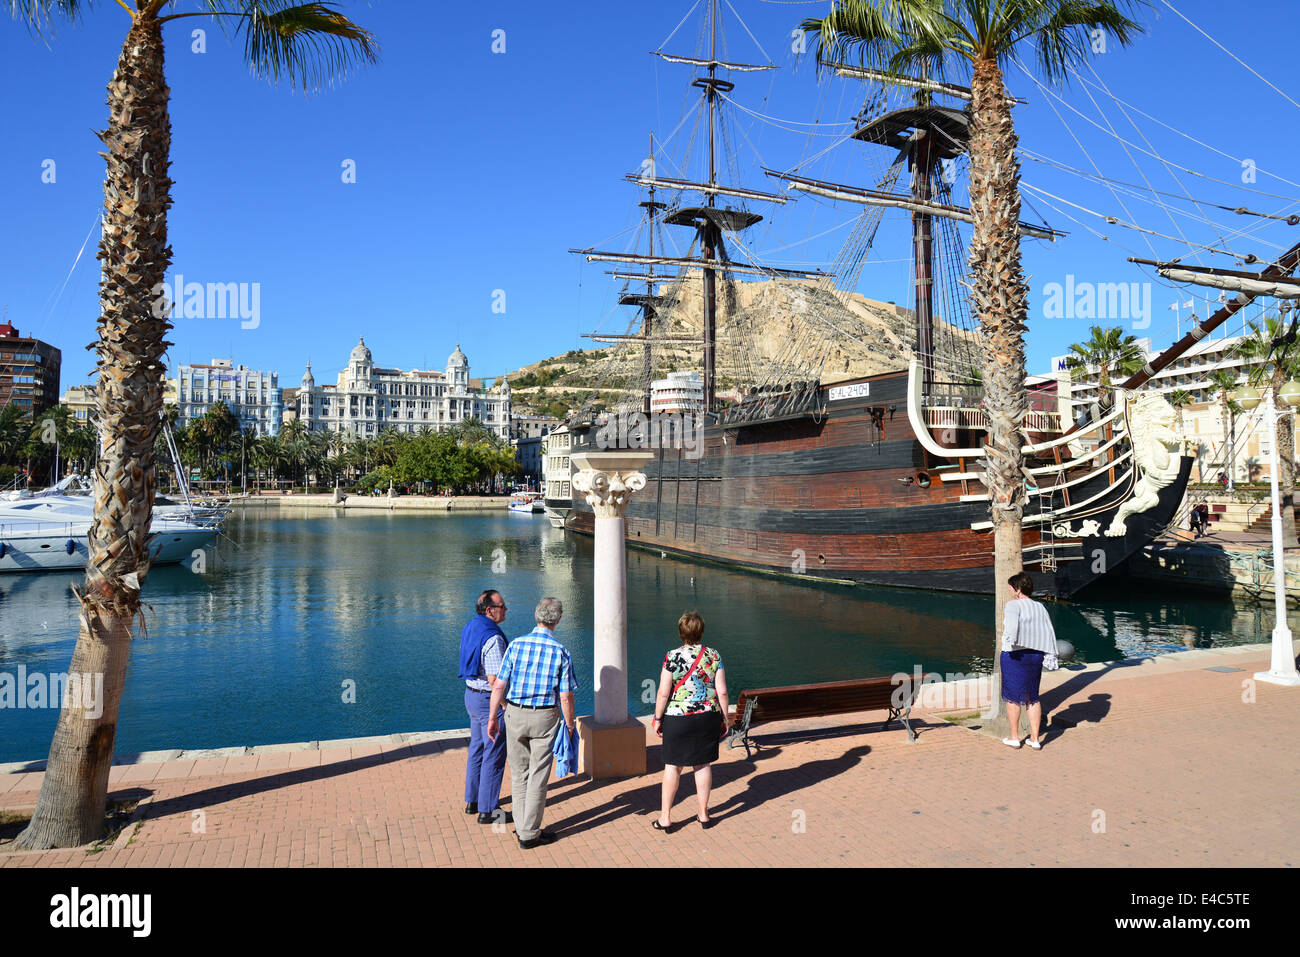 Spanish Galleon 'Santisima Trinidad' in Port of Alicante, Alicante, Costa Blanca, Alicante Province, Kingdom of Spain Stock Photo